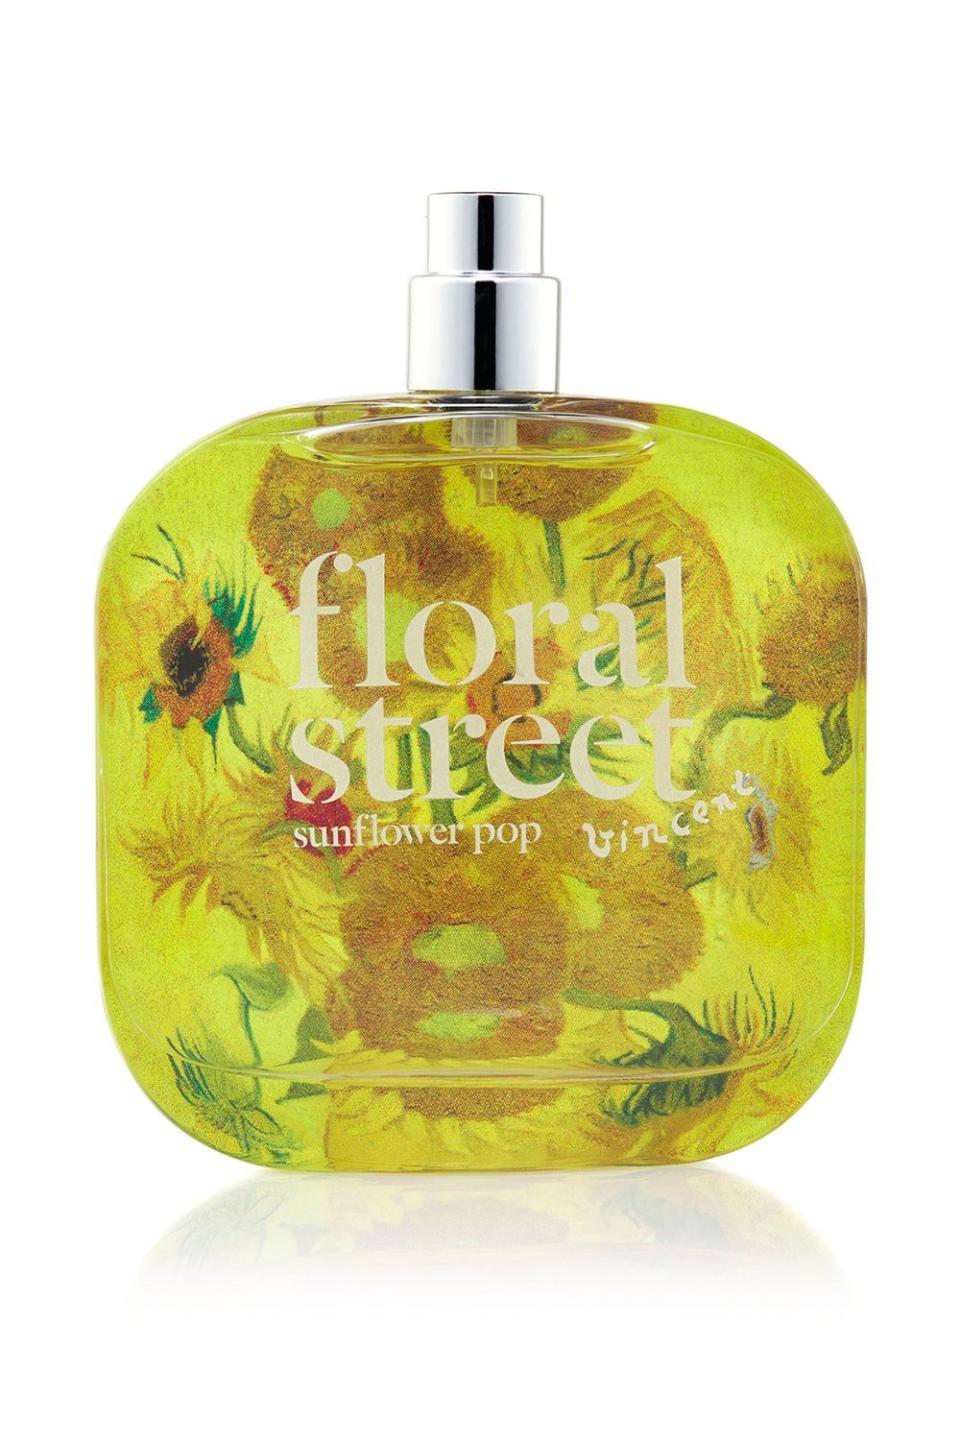 3) Floral Street Sunflower Pop Eau De Parfum